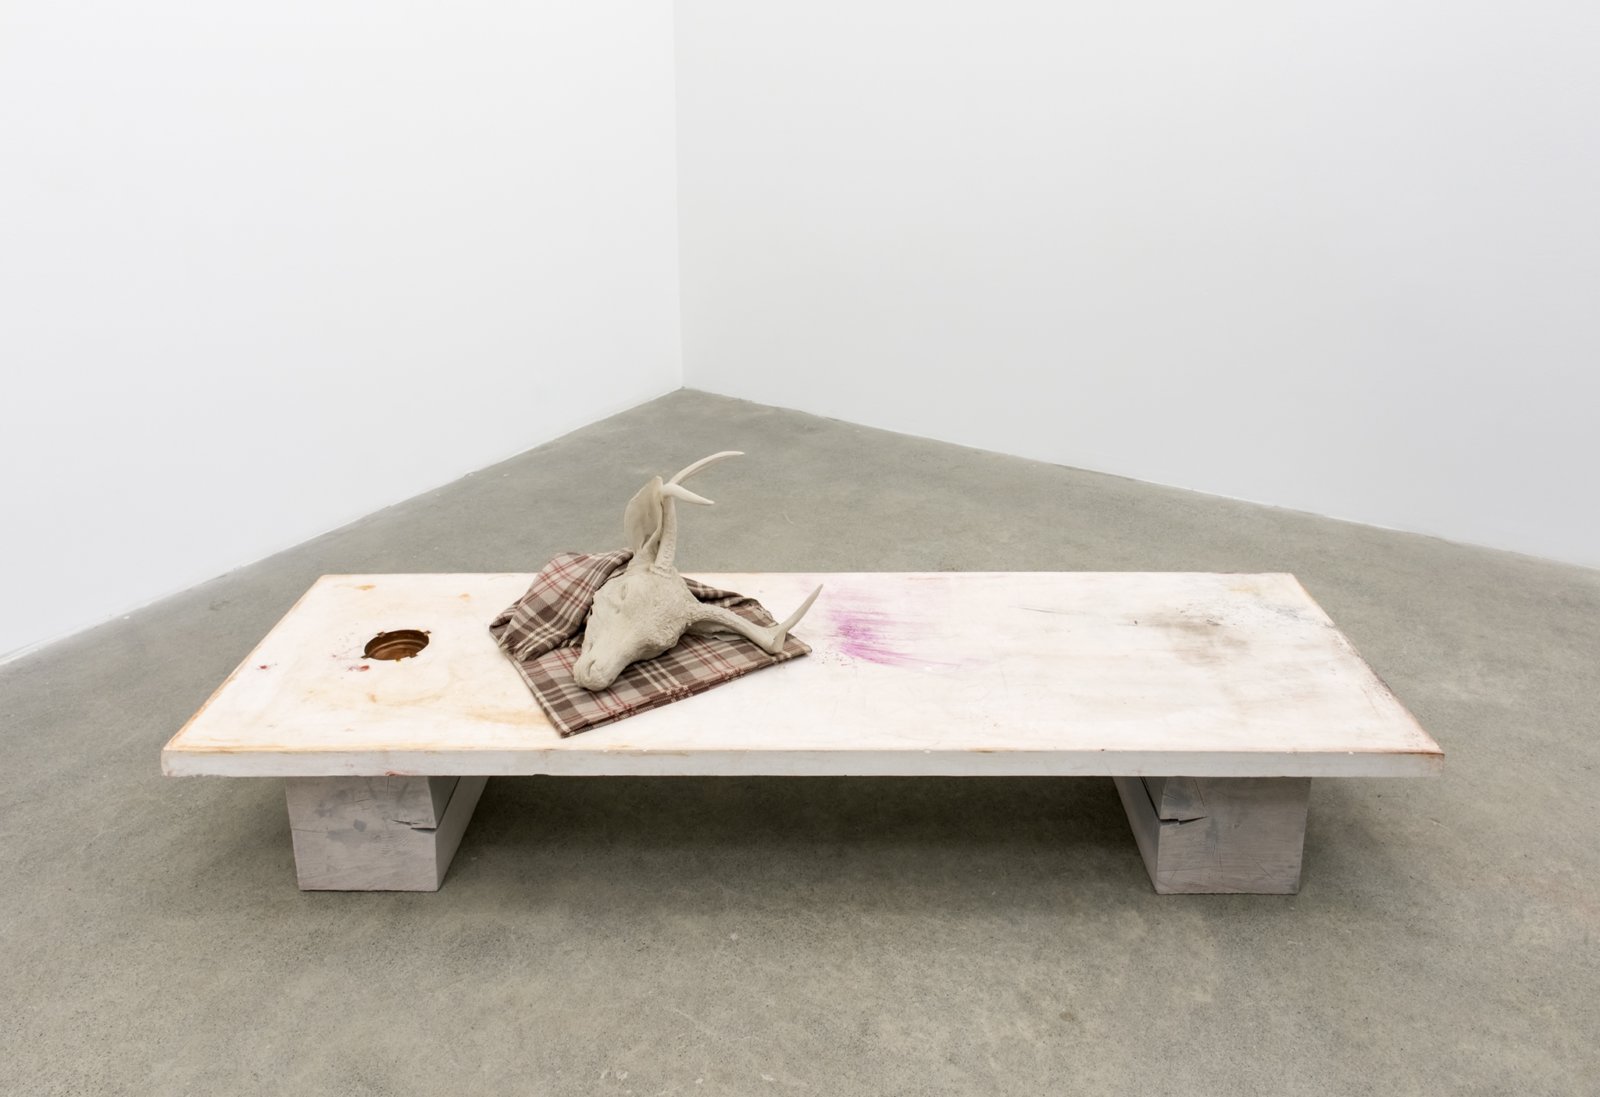 Liz Magor, Long Table (ashtray), 2006–2018, polymerized gypsum, cotton, 22 x 24 x 78 in. (56 x 61 x 198 cm)